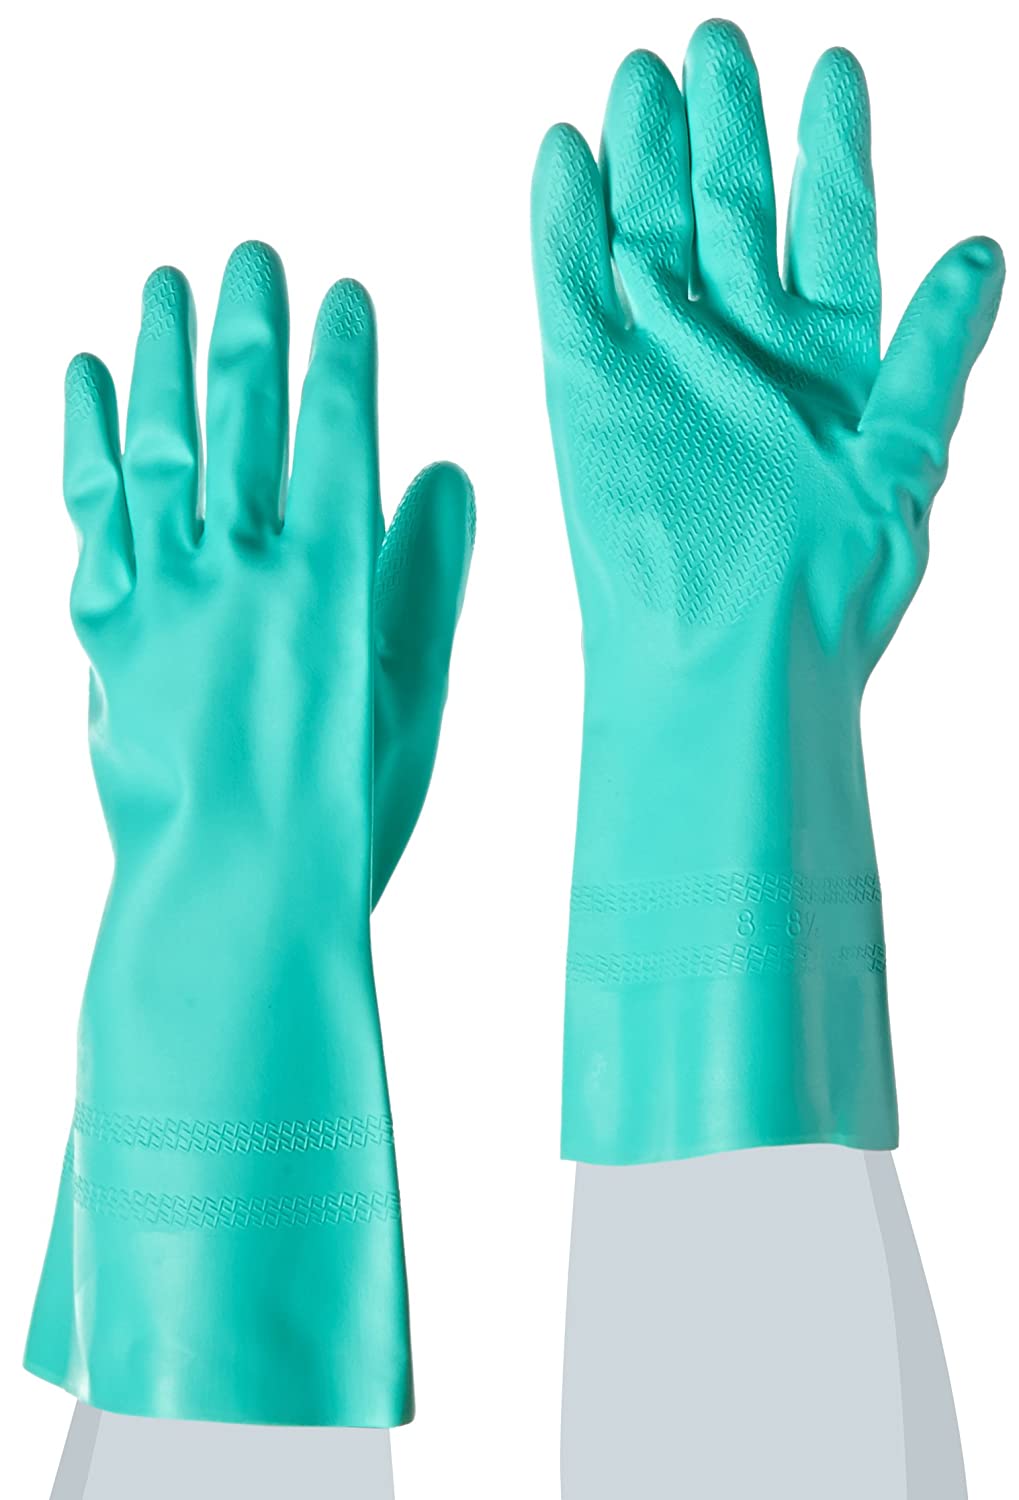 StanSolv AF-18 Nitrile Glove, Chemical Resistant Glove